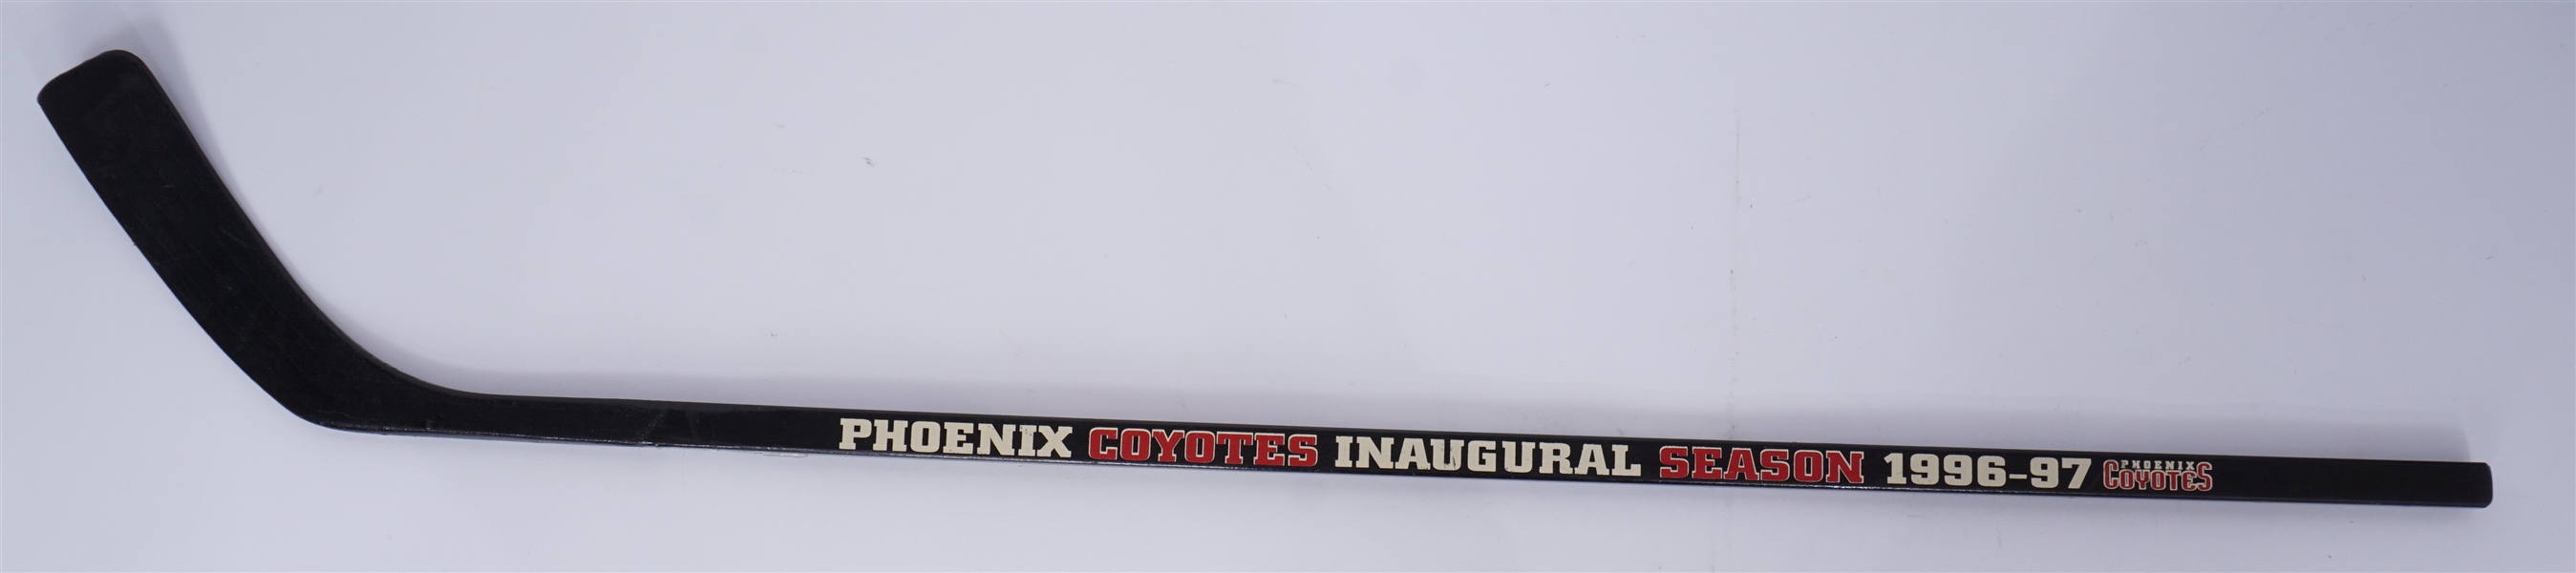 Phoenix Coyotes Inaugural Season Commemorative Hockey Stick